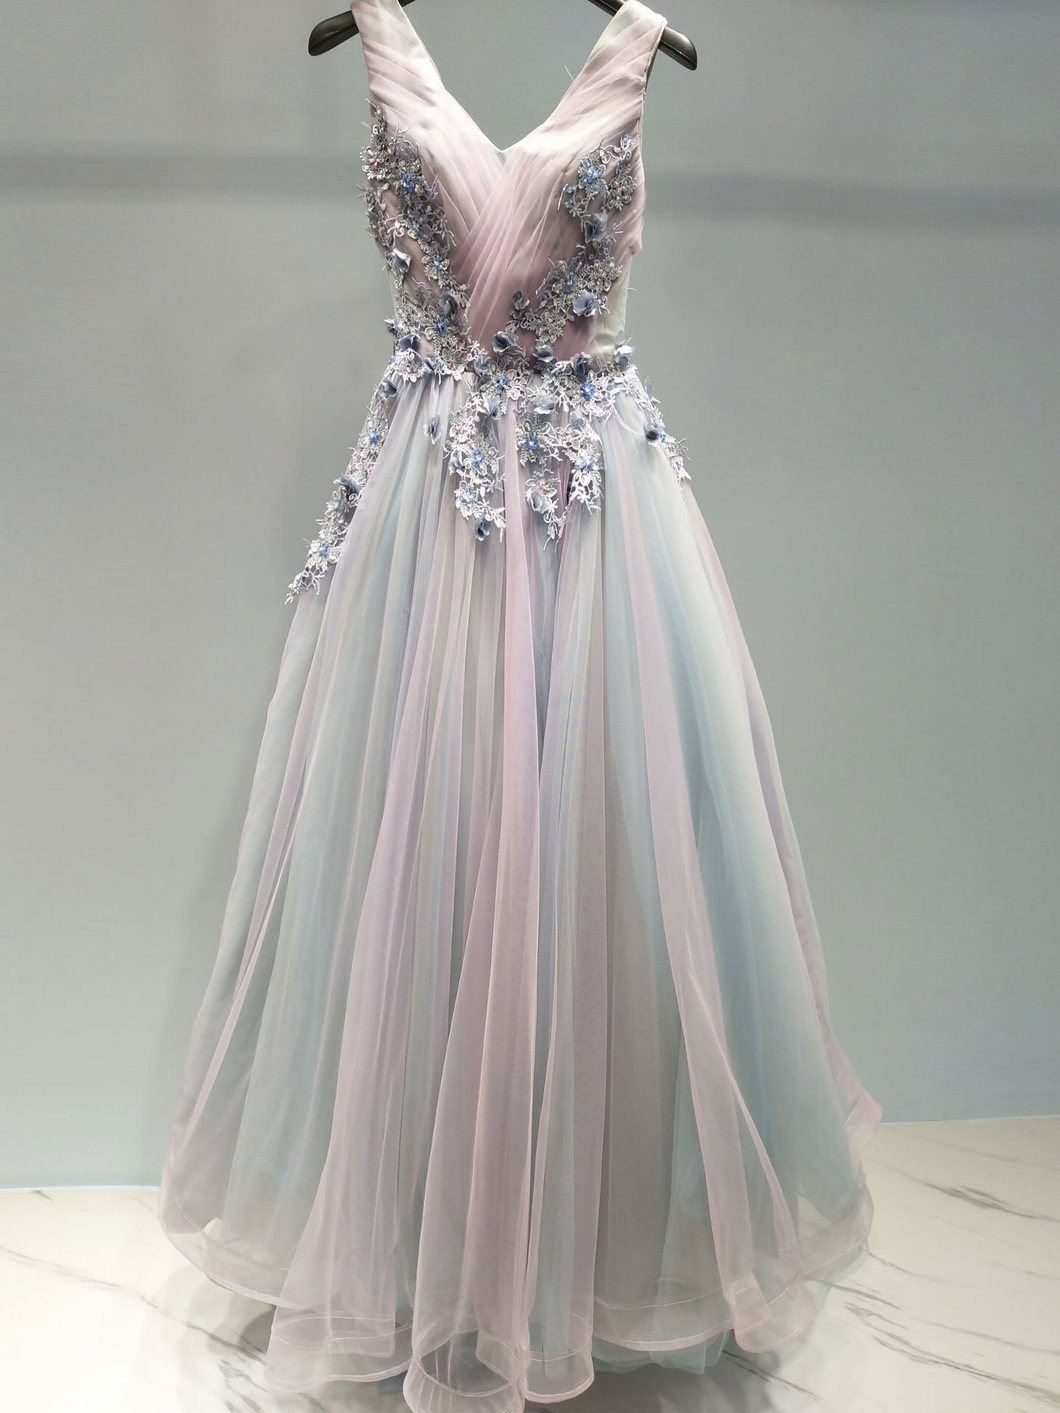 Beautiful Prom Dresses A-line V-neck Sweep Train Long Colorful Chic Prom Dress JKL1325|Annapromdress